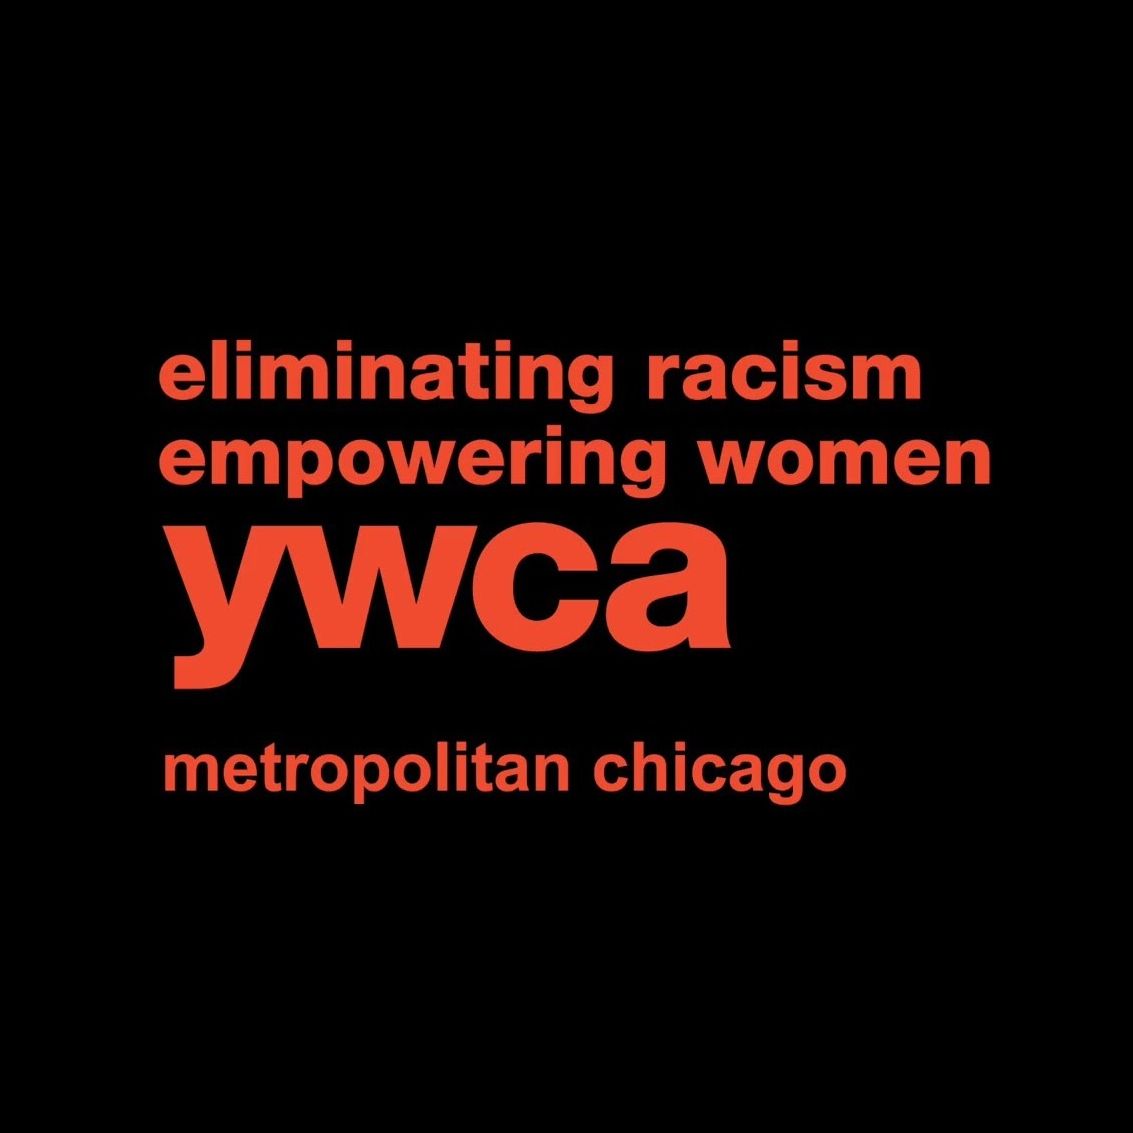 Woman Organization in Chicago Illinois - YWCA Metropolitan Chicago